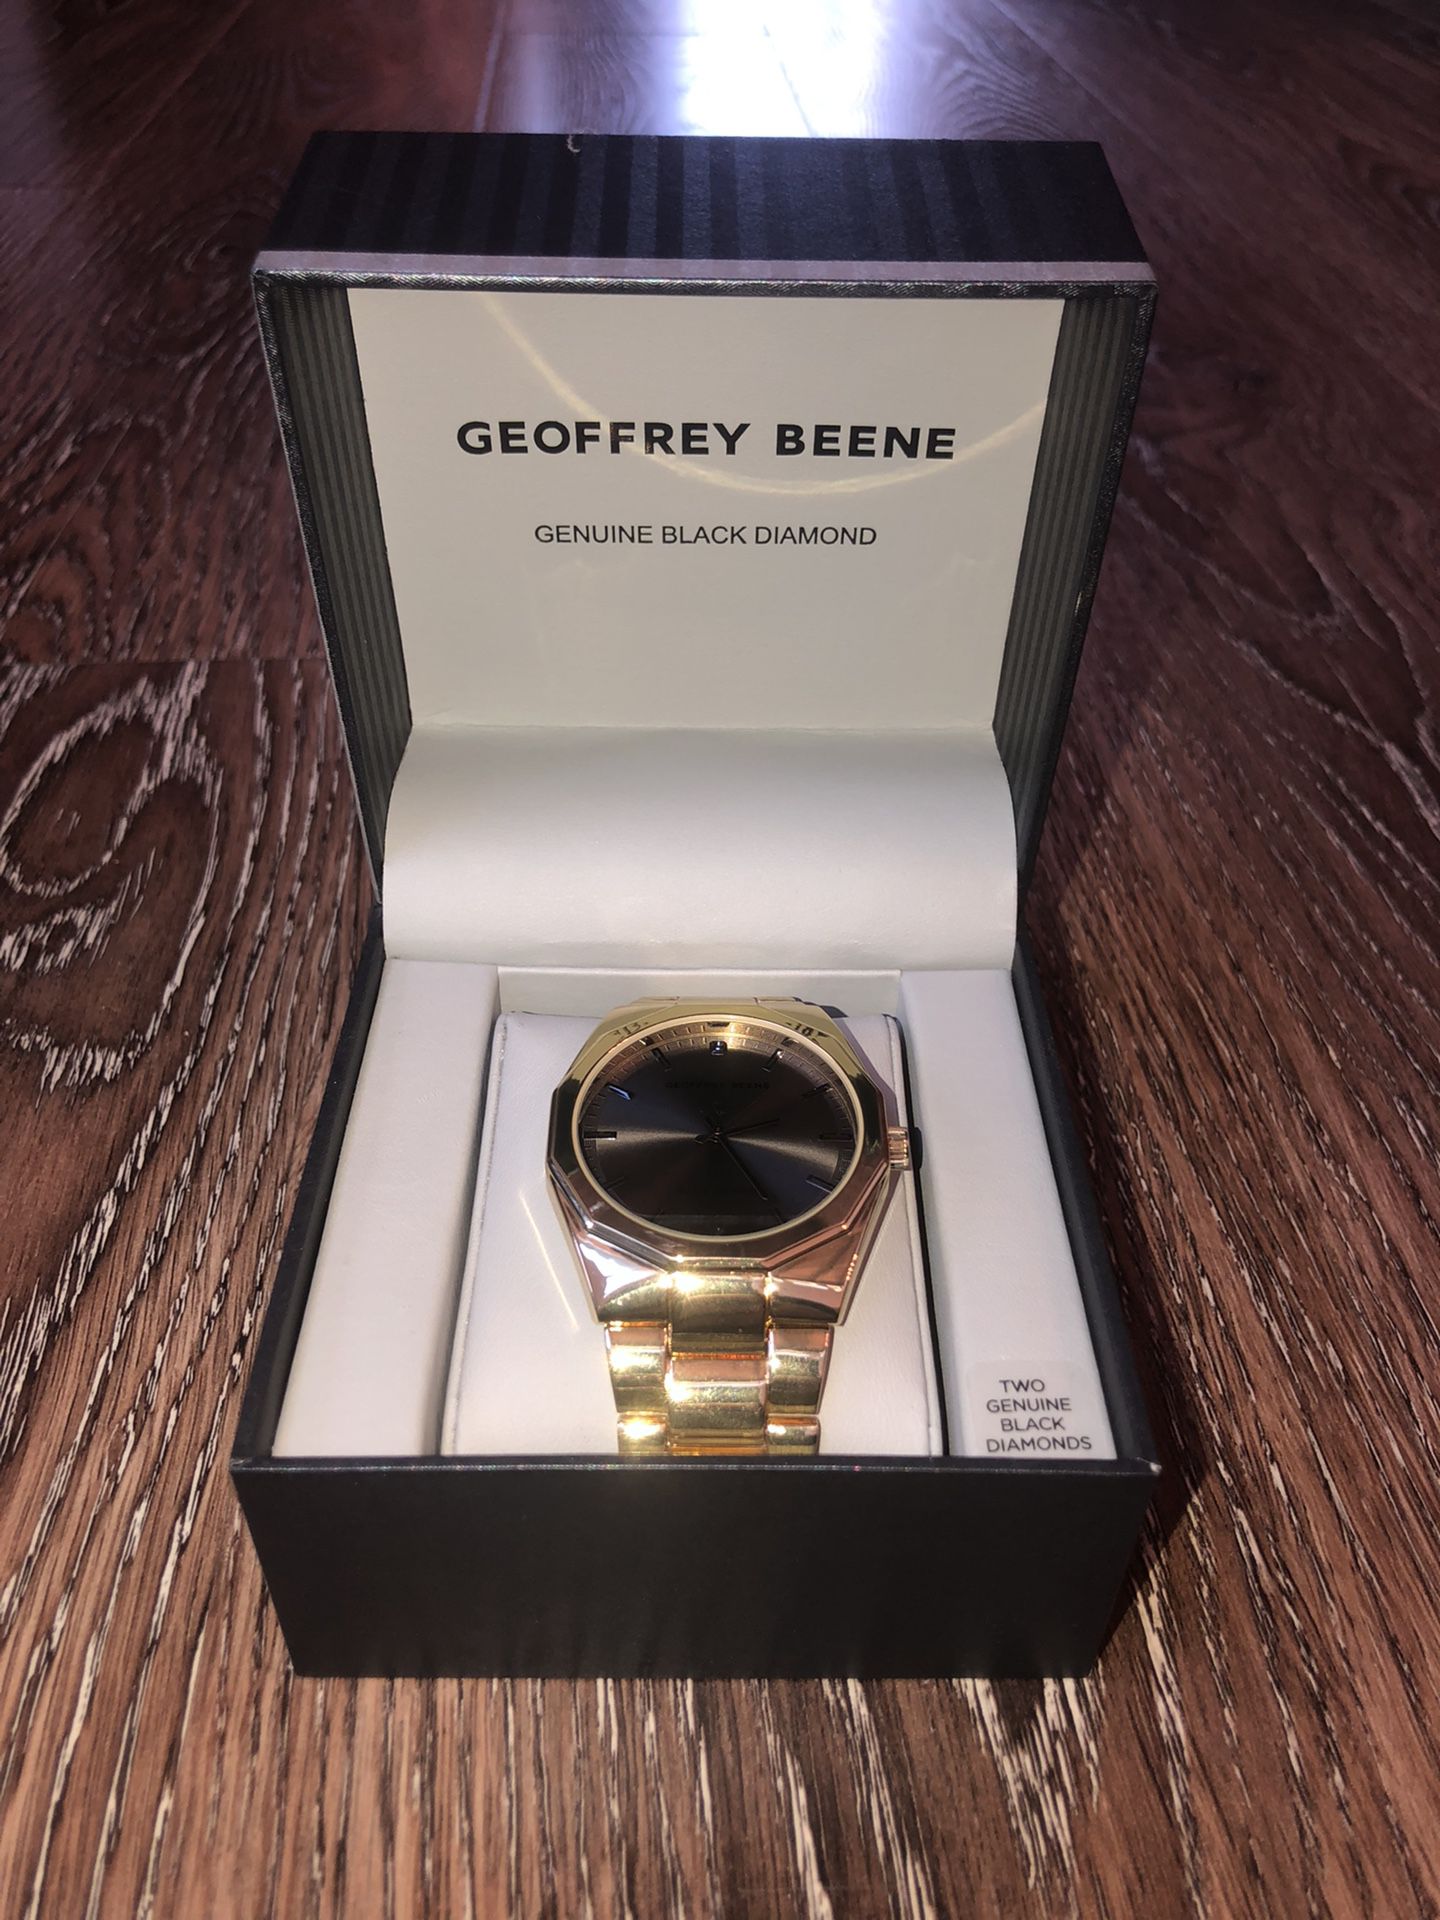 Geoffrey Beene Gold, Black Faced Watch for Sale in Irvine, CA - OfferUp